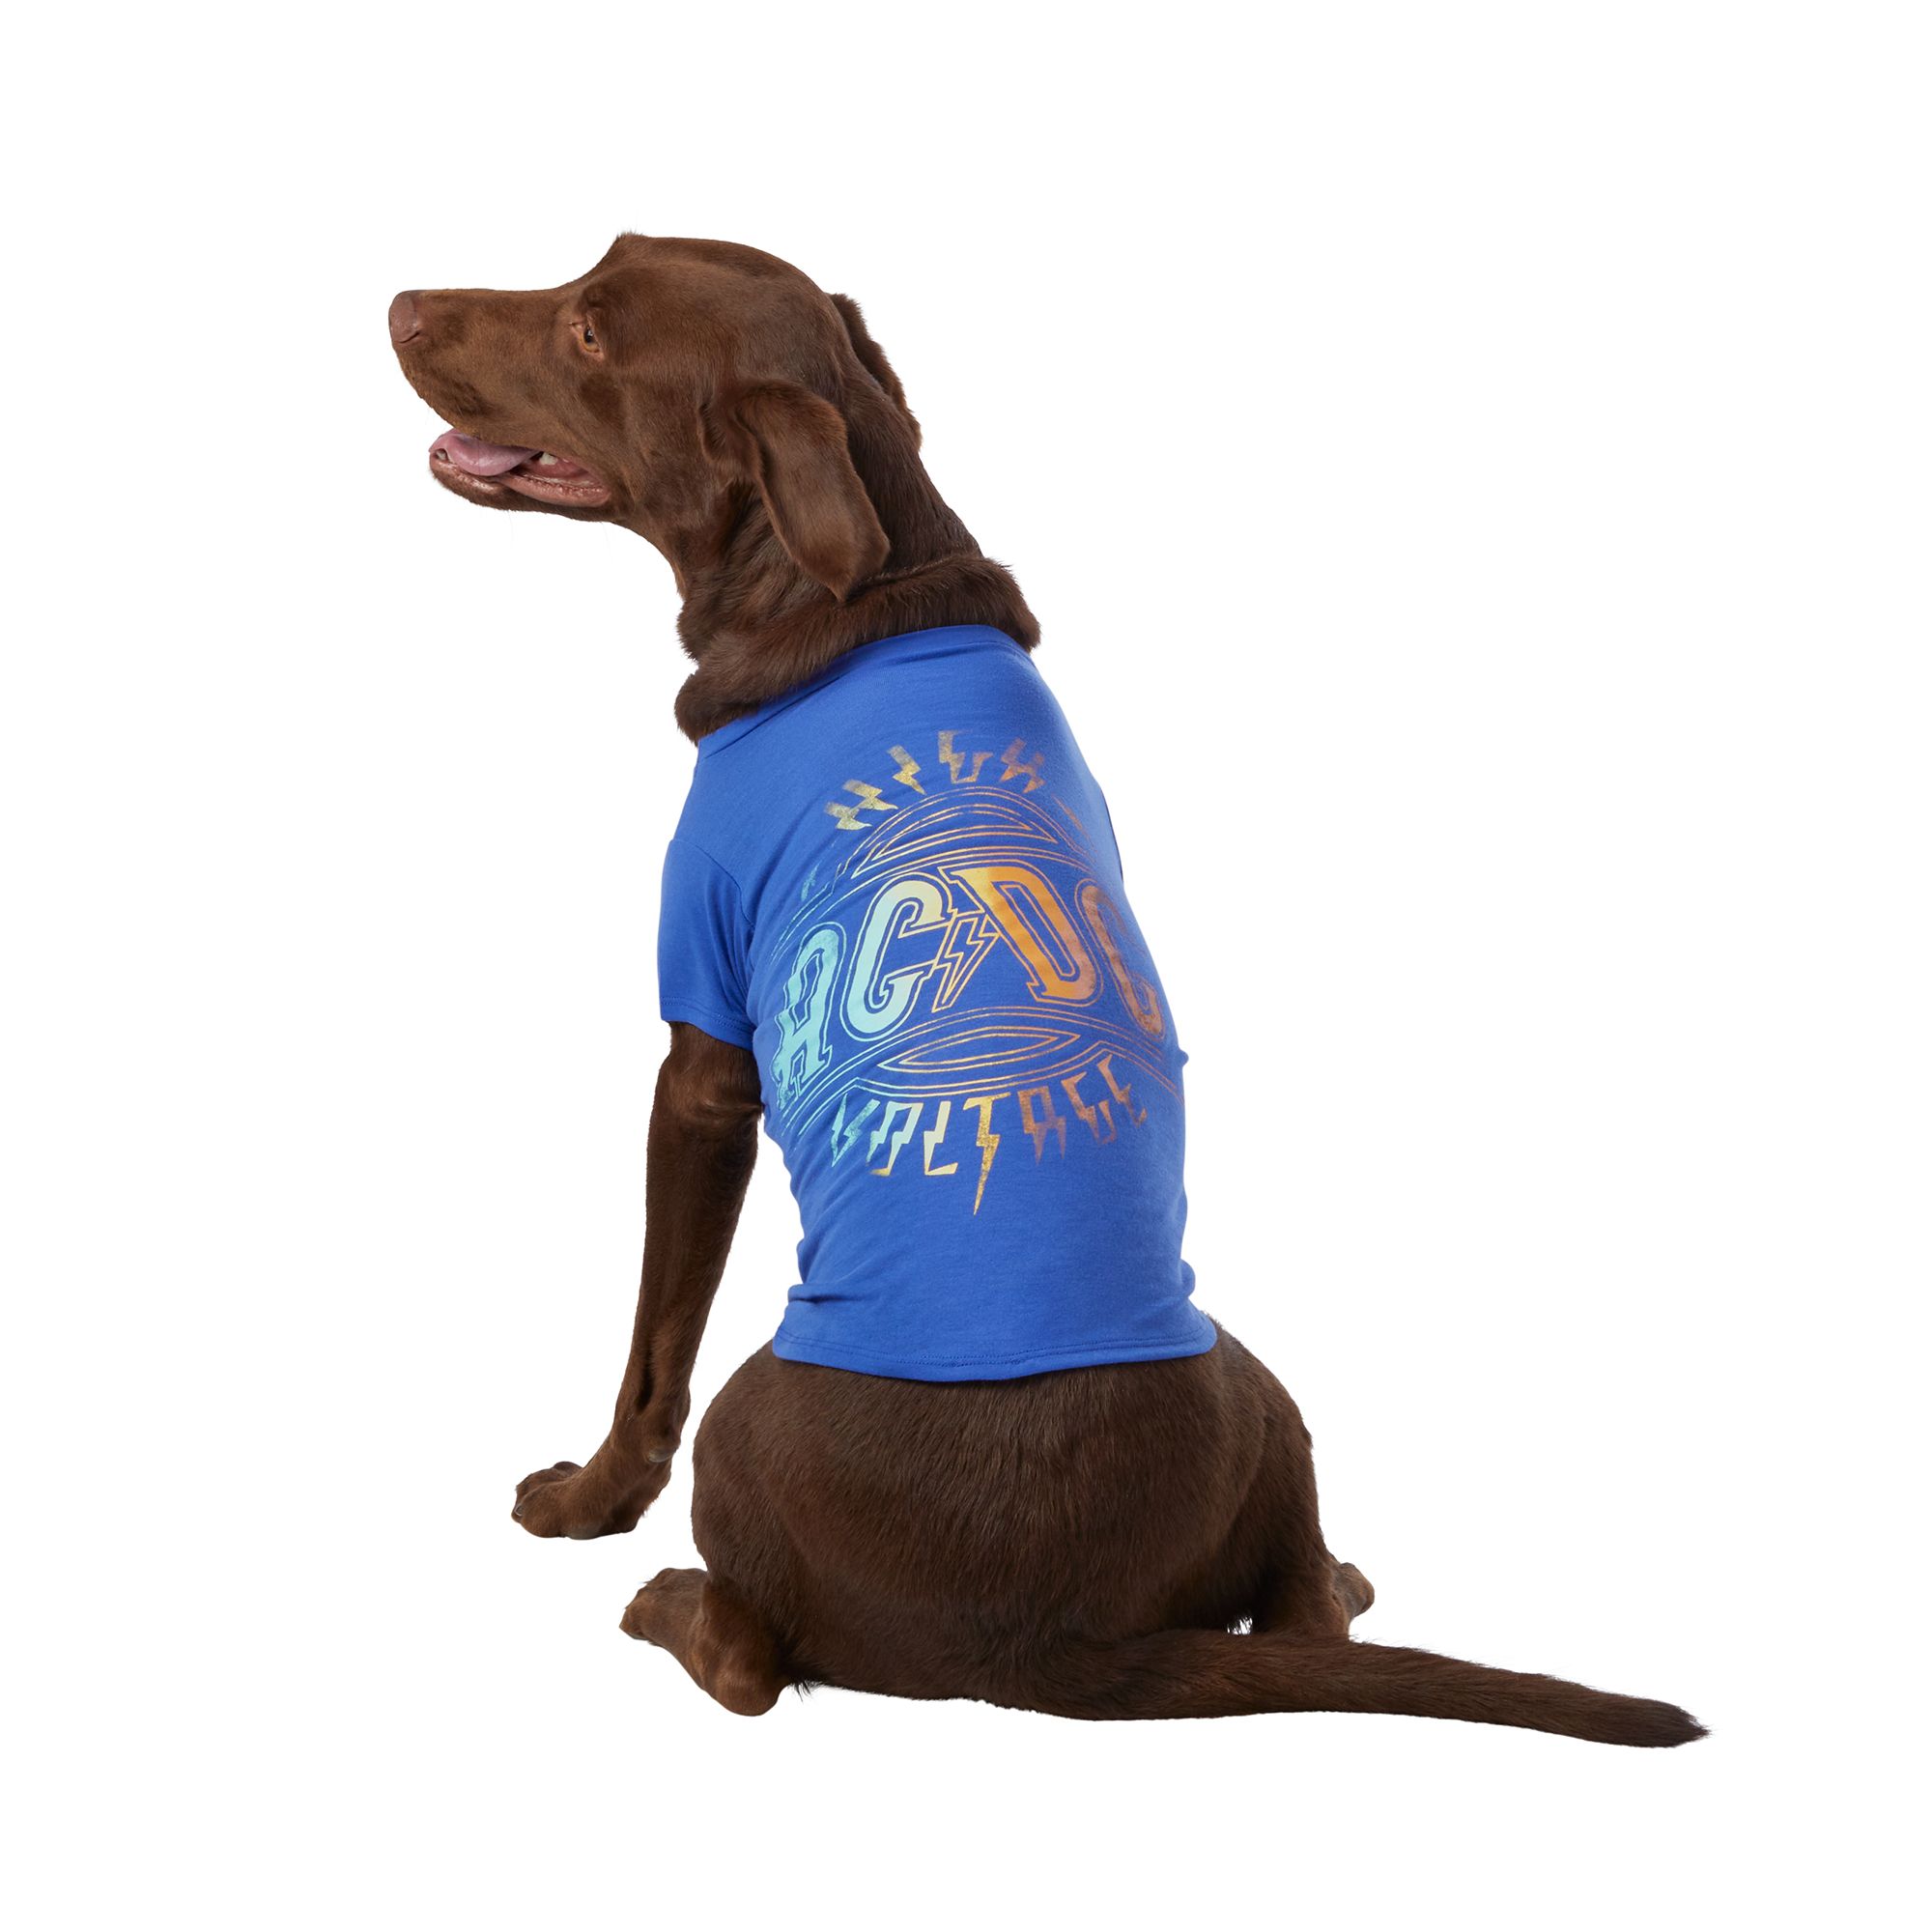 Blended Clothing AC/DC Dog Tee | dog T-shirts Tank Tops | PetSmart